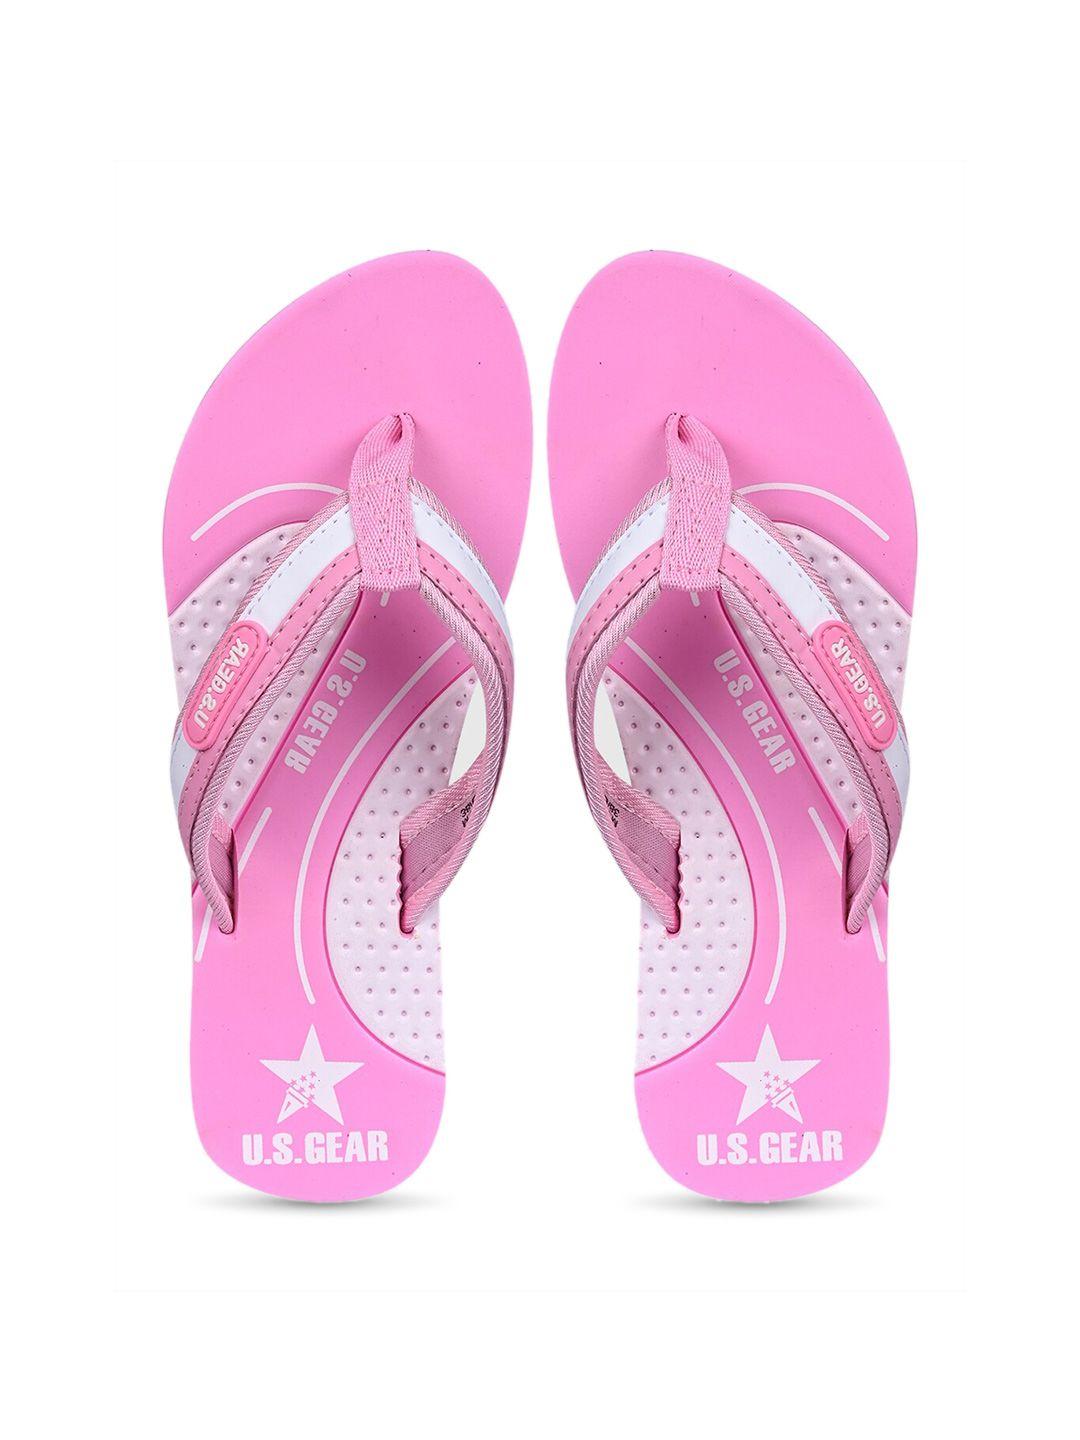 u s gear women pink & white printed rubber thong flip-flops